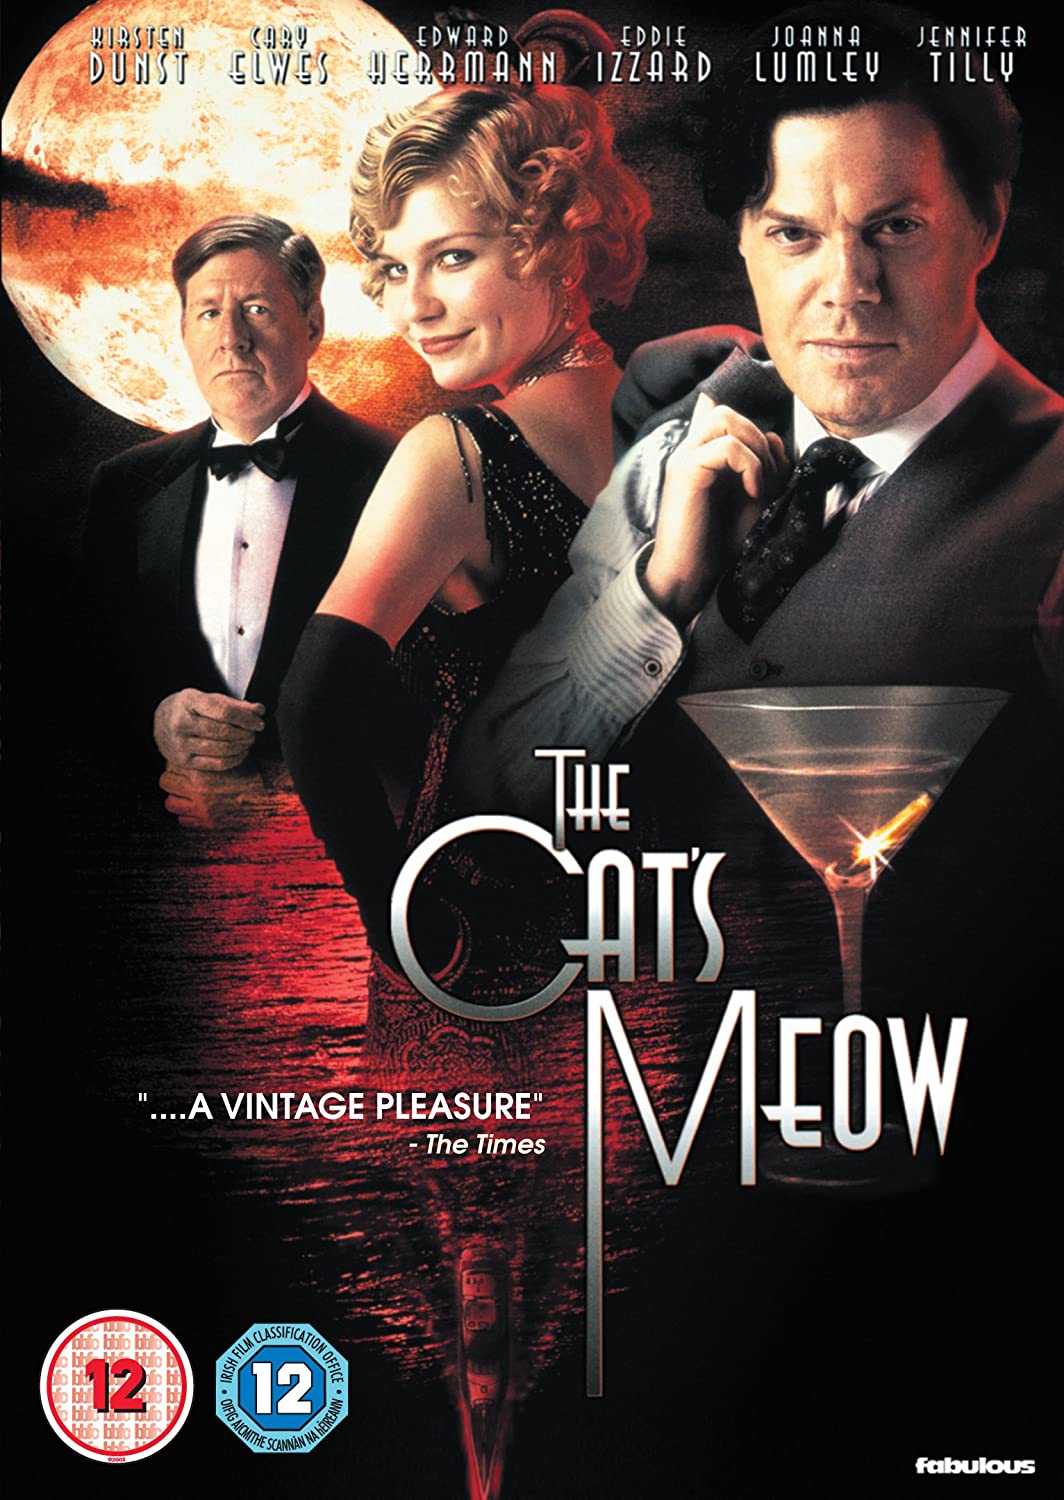 The Cat's Meow (2001) starring Edward Herrmann, Cary Elwes, Kirsten Dunst, Eddie Izzard